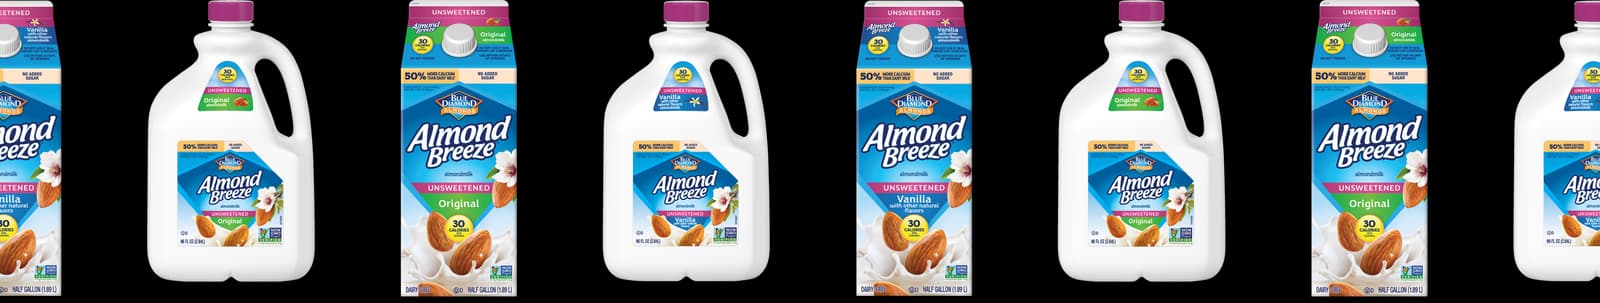 Almondbreeze product line up